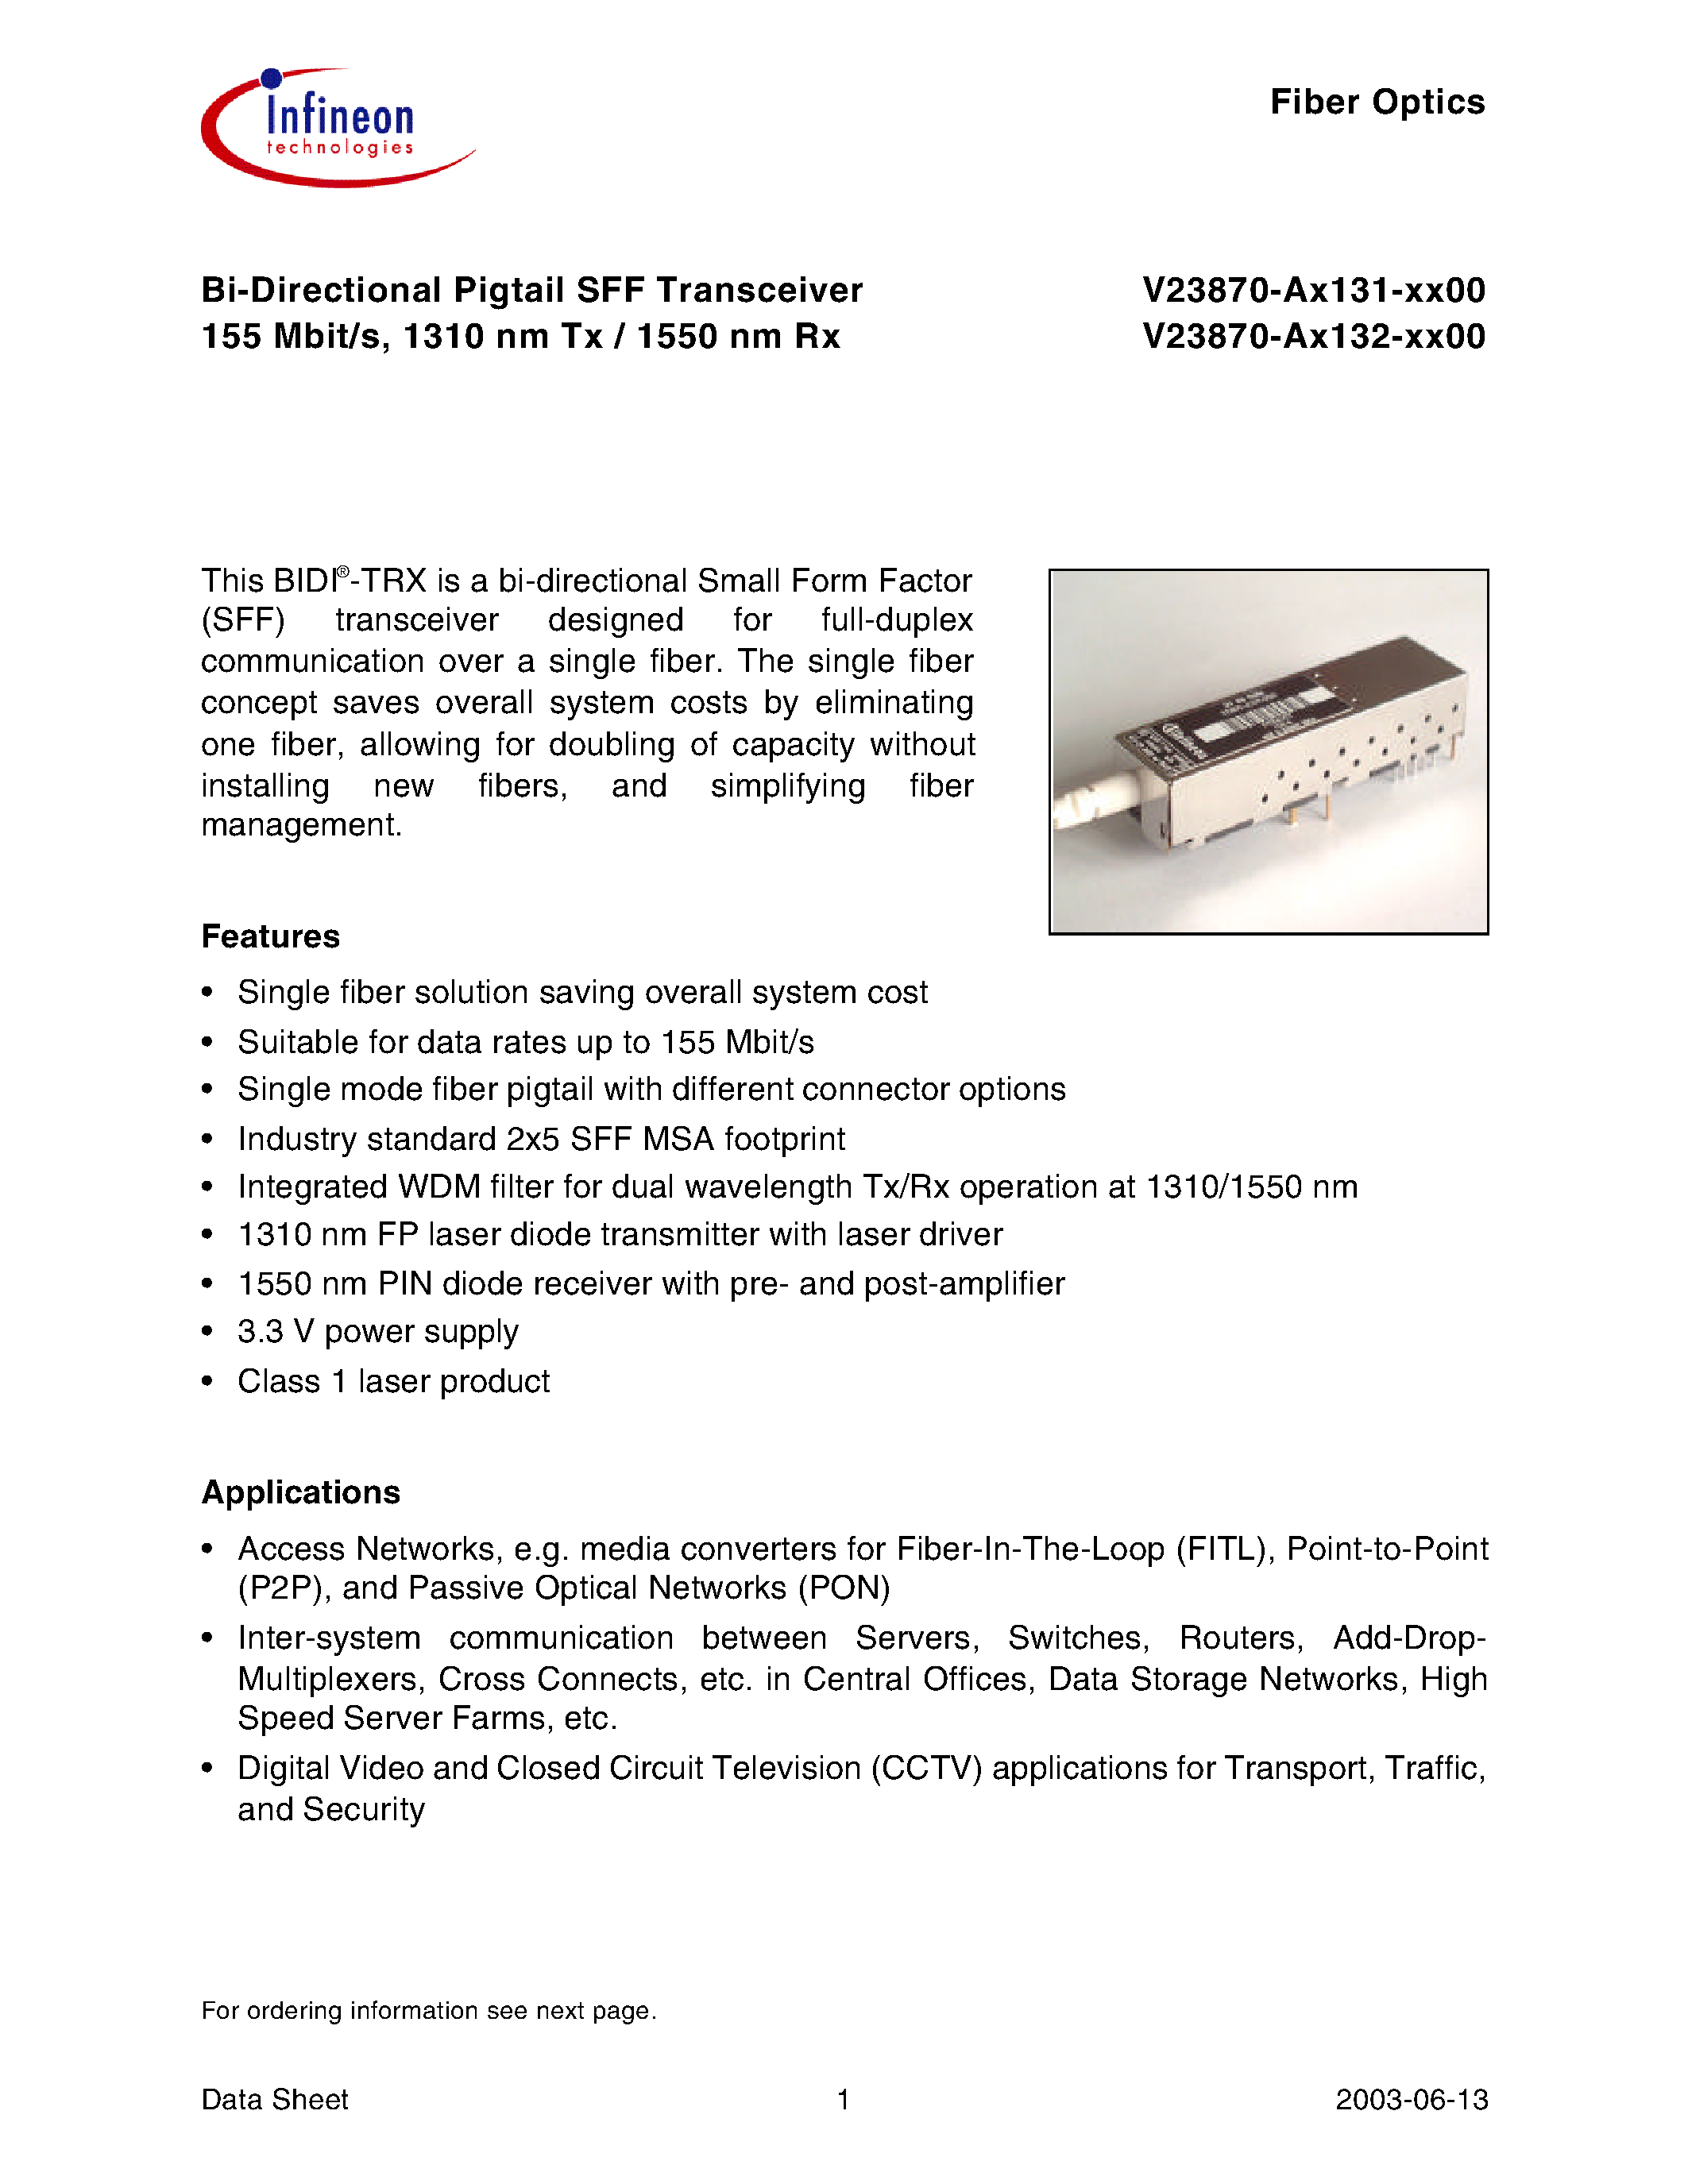 Даташит V23870-A3132-H200 - Bi-Directional Pigtail SFF Transceiver 155 Mbit/s/ 1310 nm Tx / 1550 nm Rx страница 1